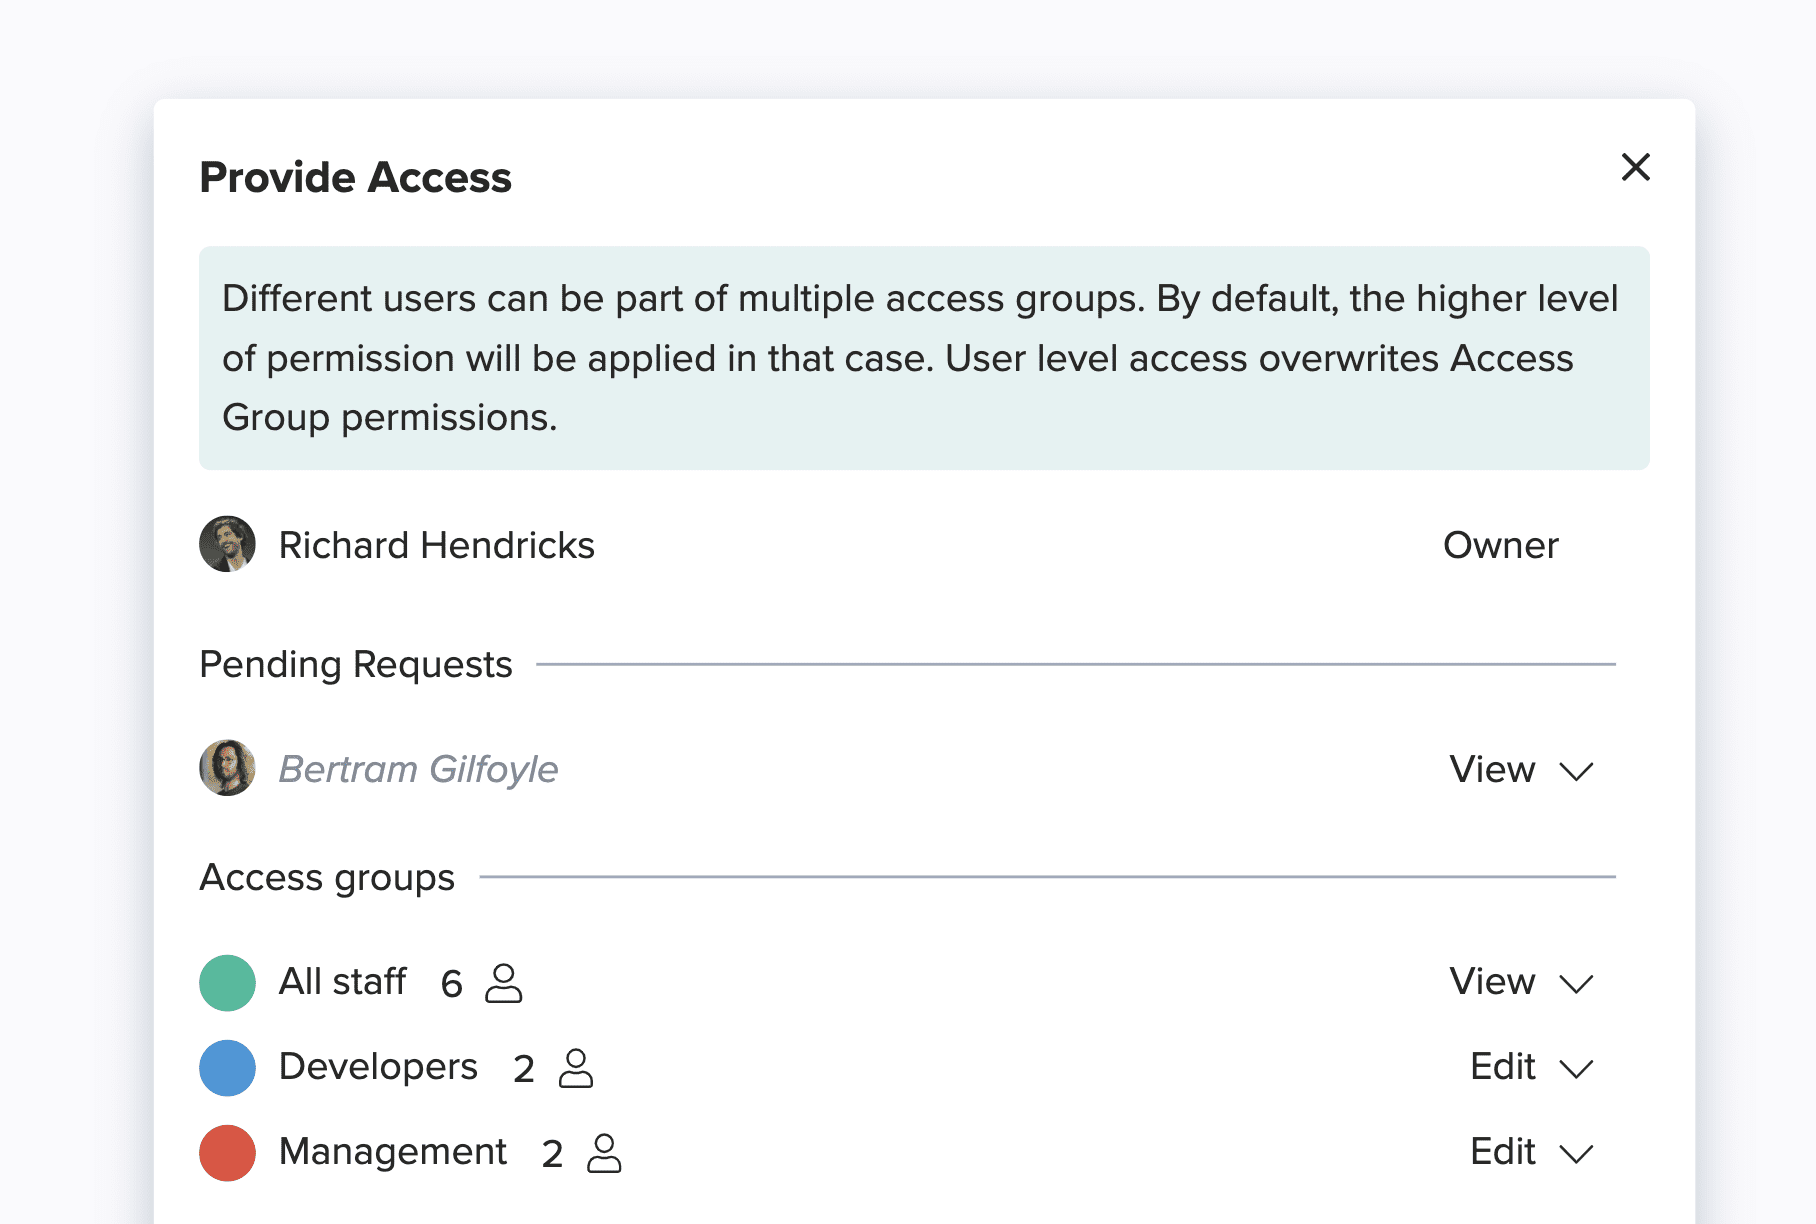 Request access - pending pop